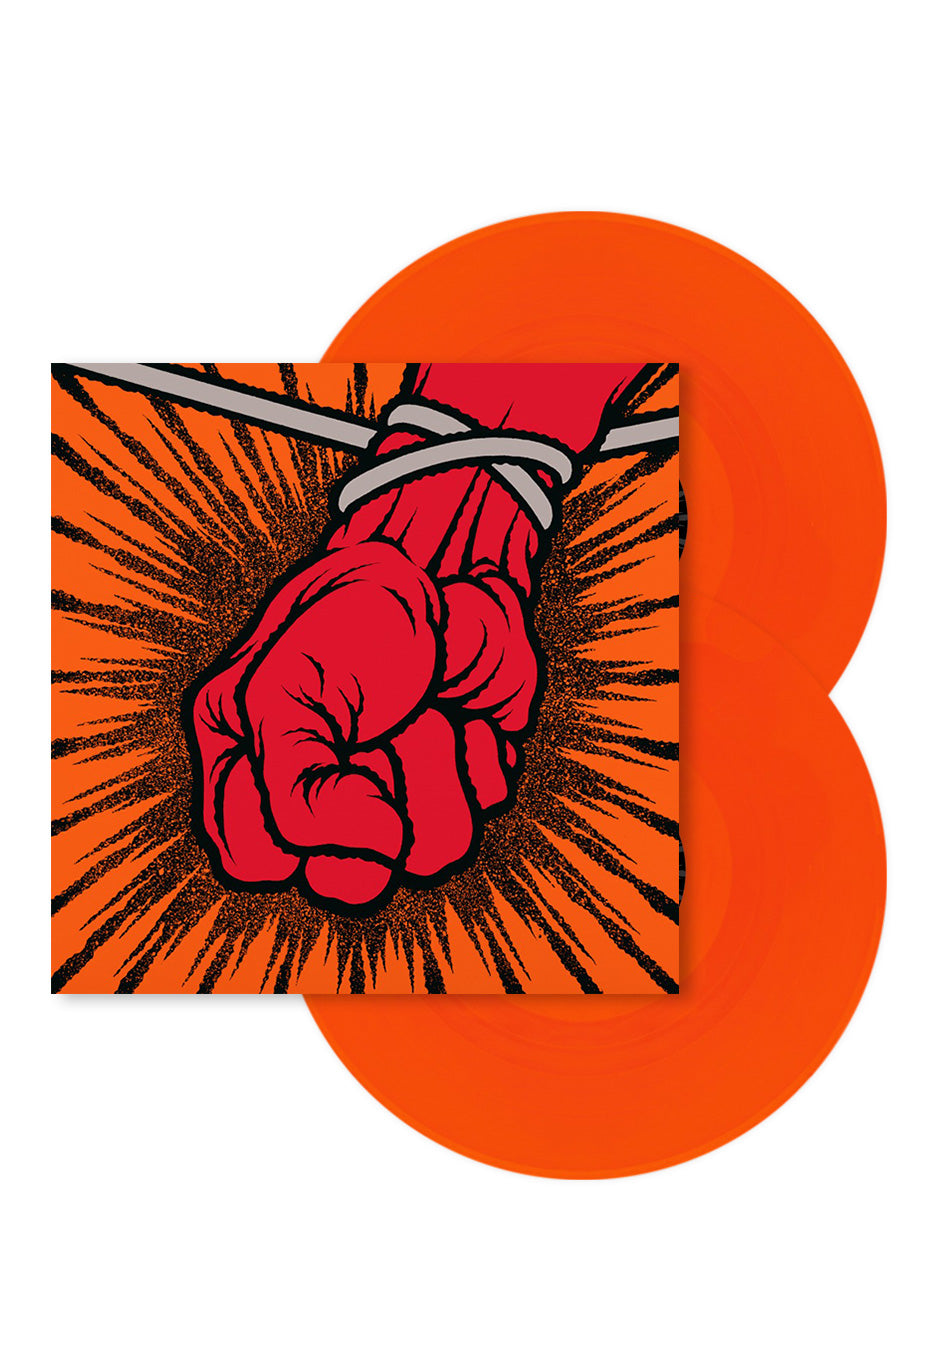 Metallica - St. Anger Orange/Red Ltd. - Colored 2 Vinyl